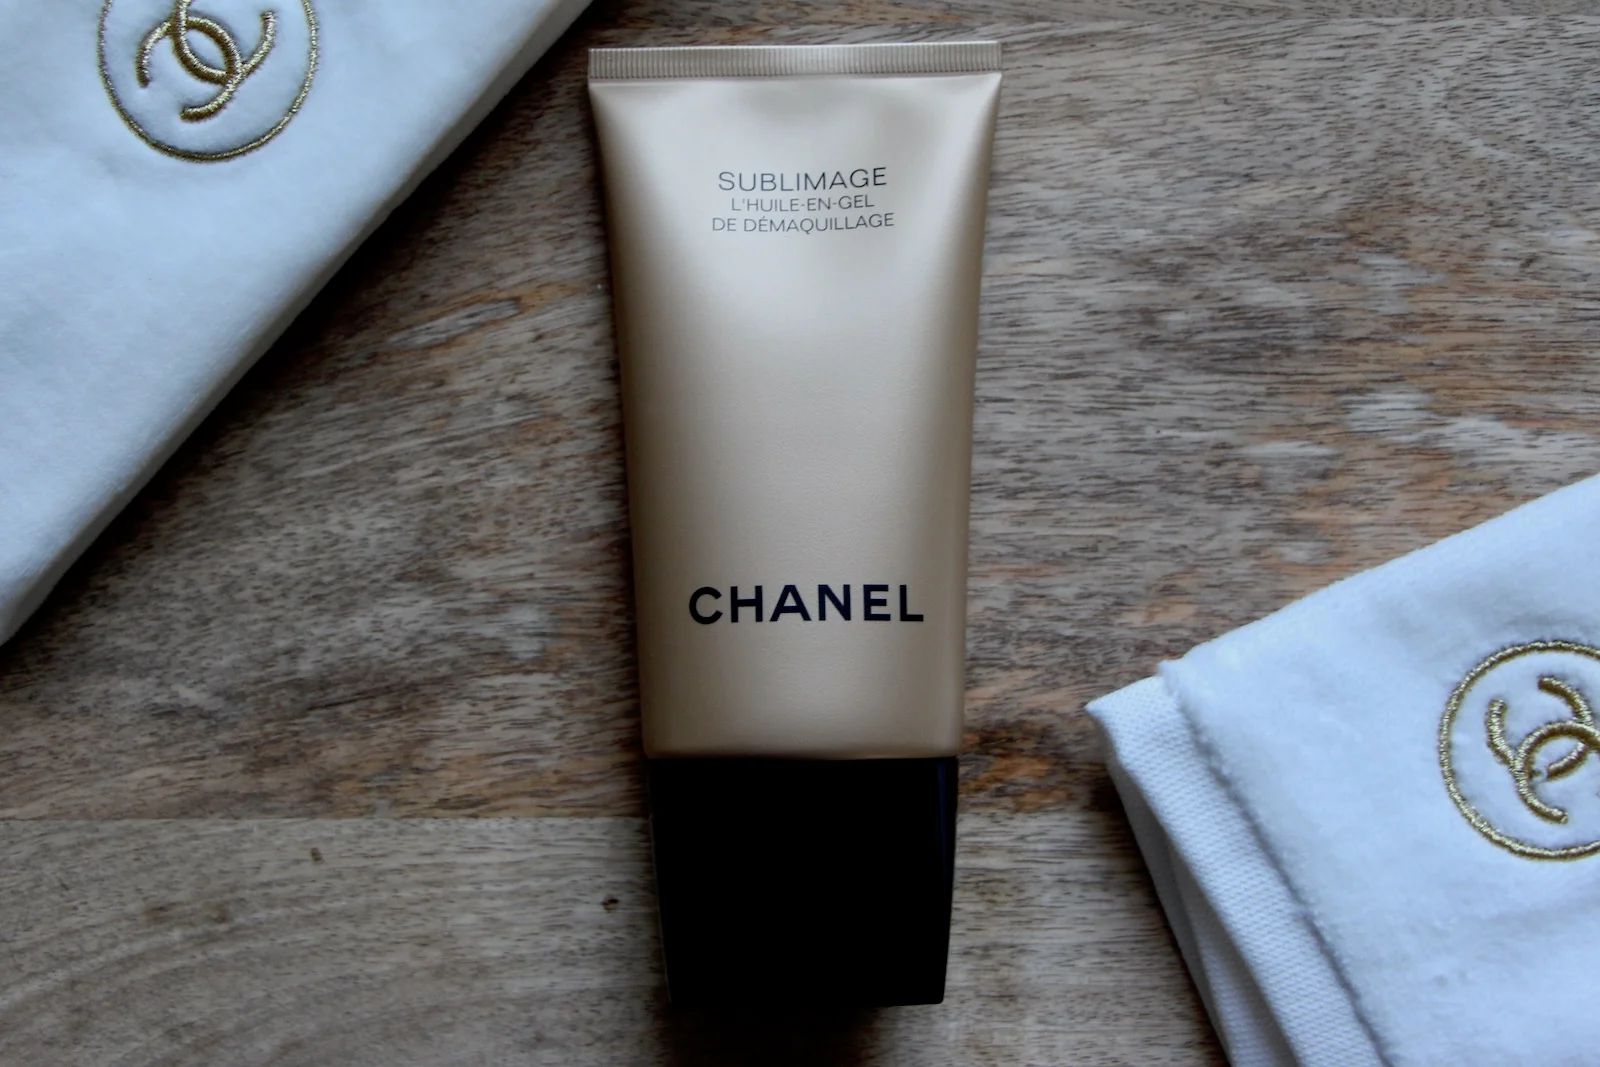 Press Trip de Chanel: A Masterclass in Branding